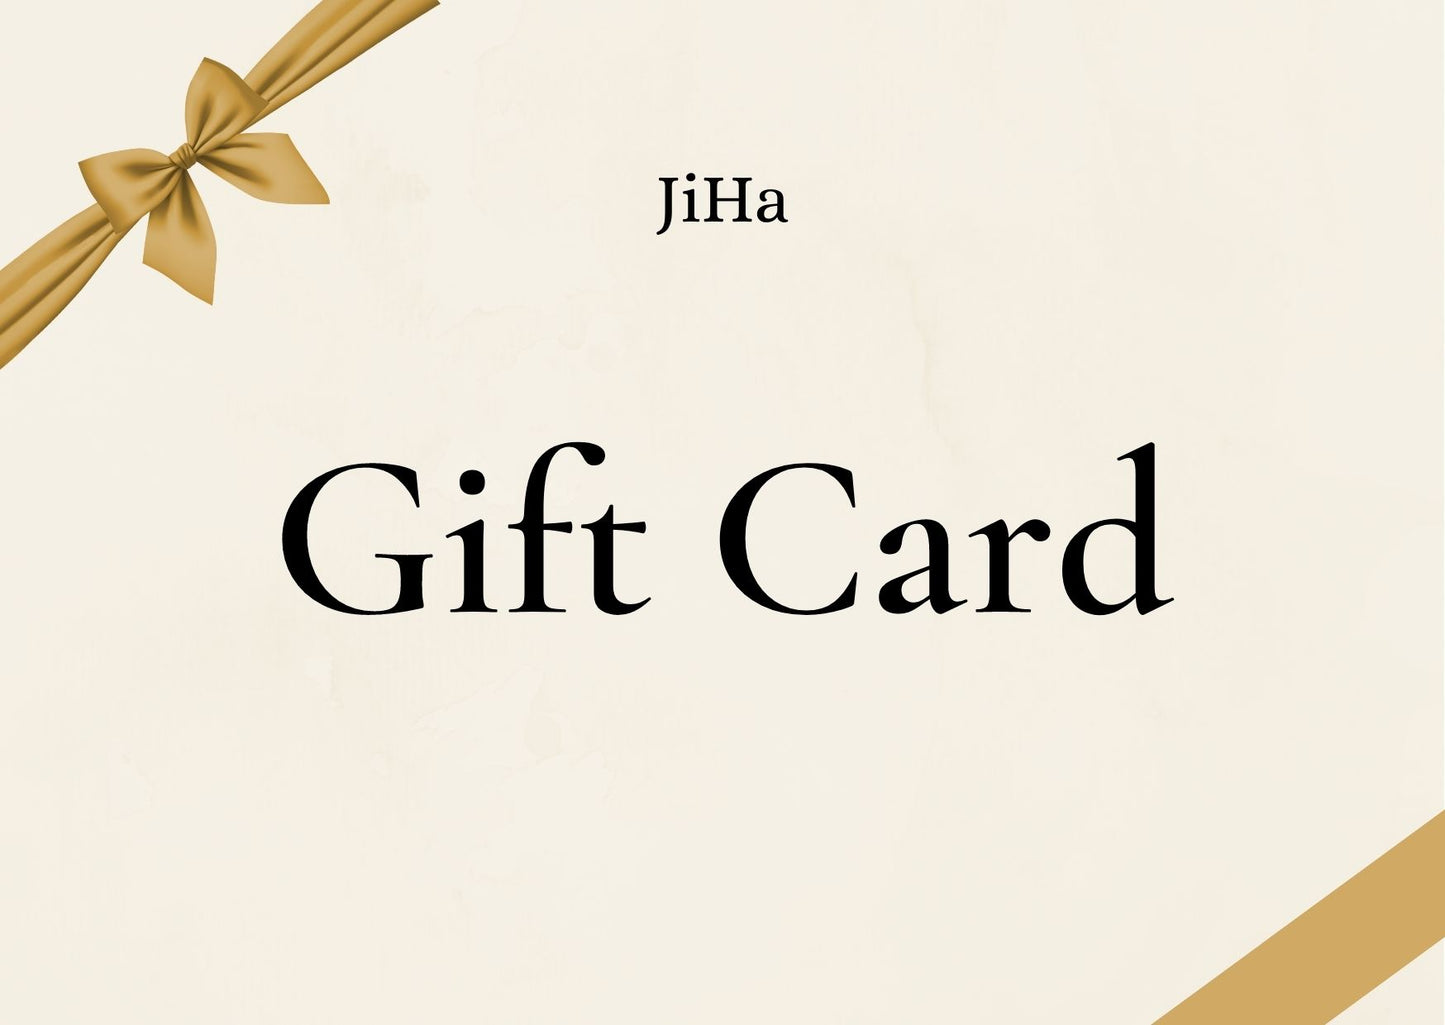 Jiha Gift Card